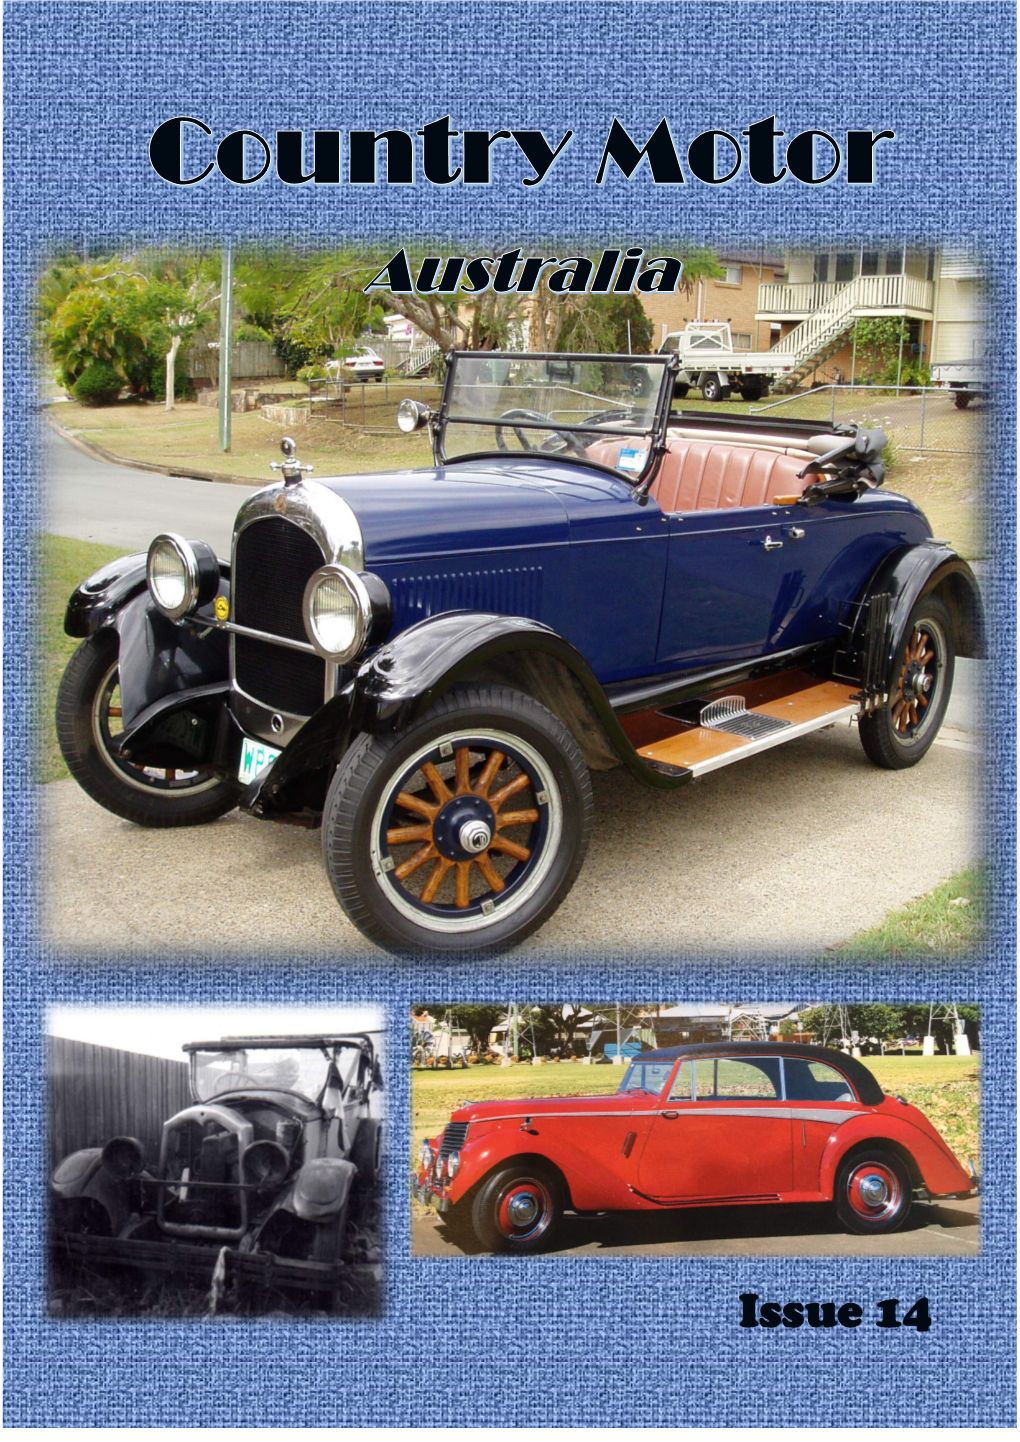 Country Motor Australia Issue 14 1